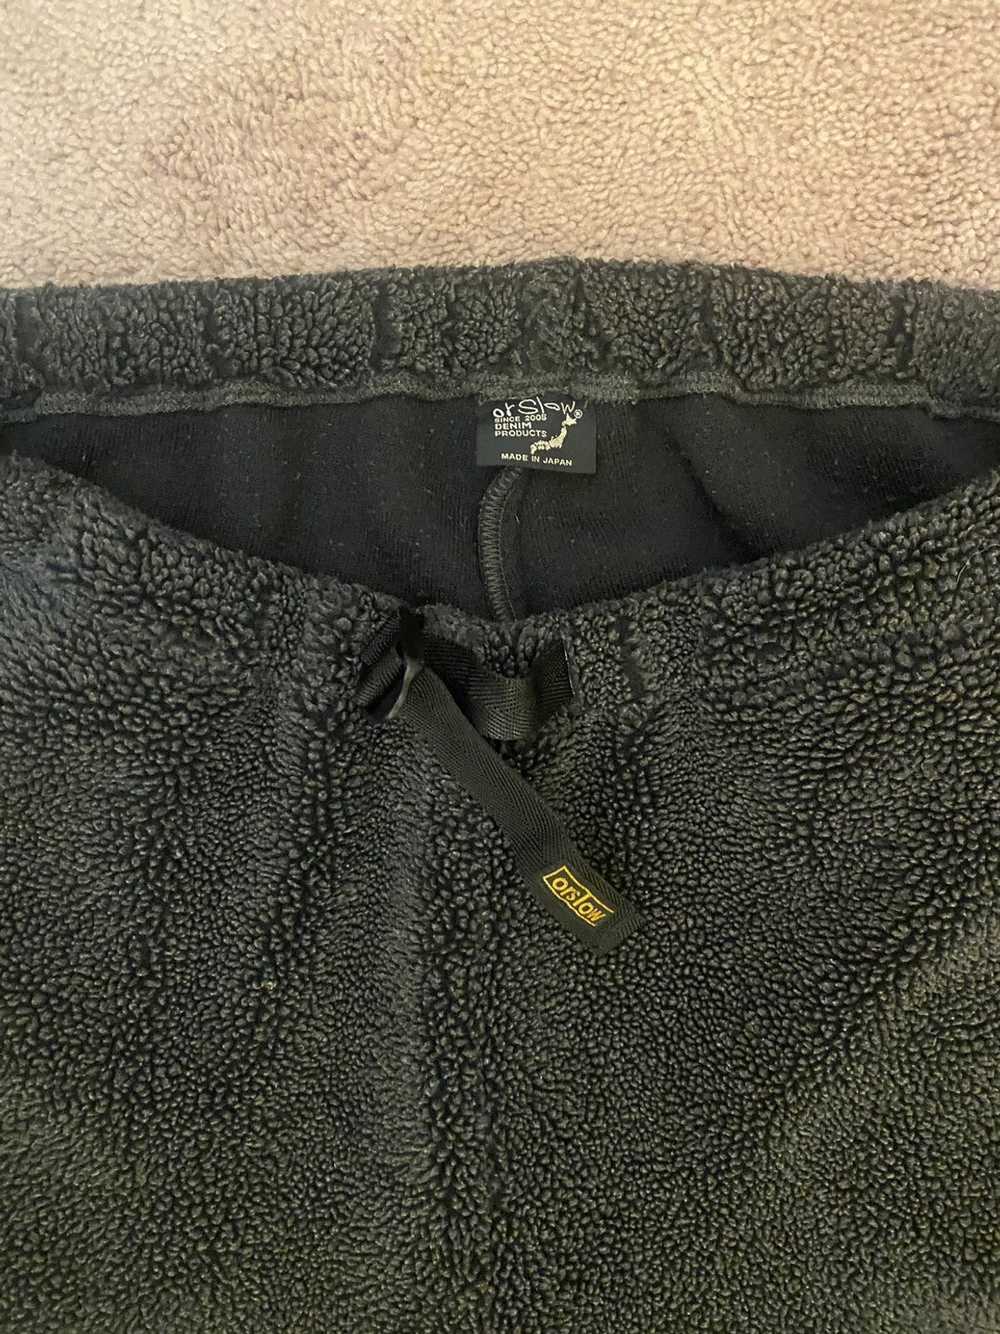 Orslow Orslow New Yorker Fleece pant XL - image 8